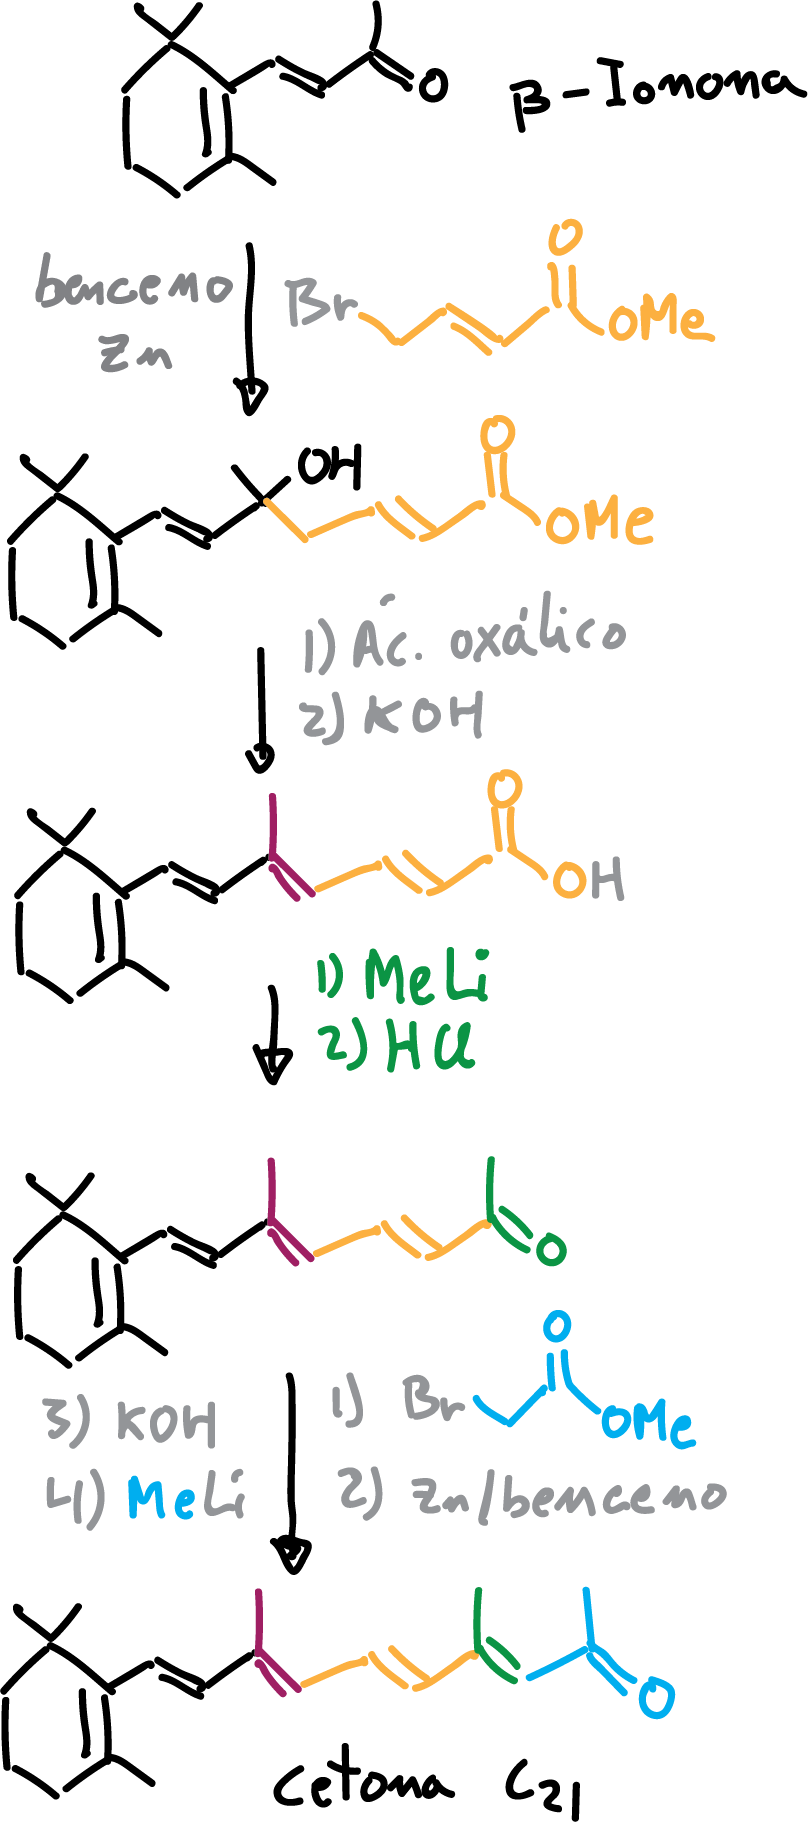 Arens-van Dorp synthesis of intermediate C21